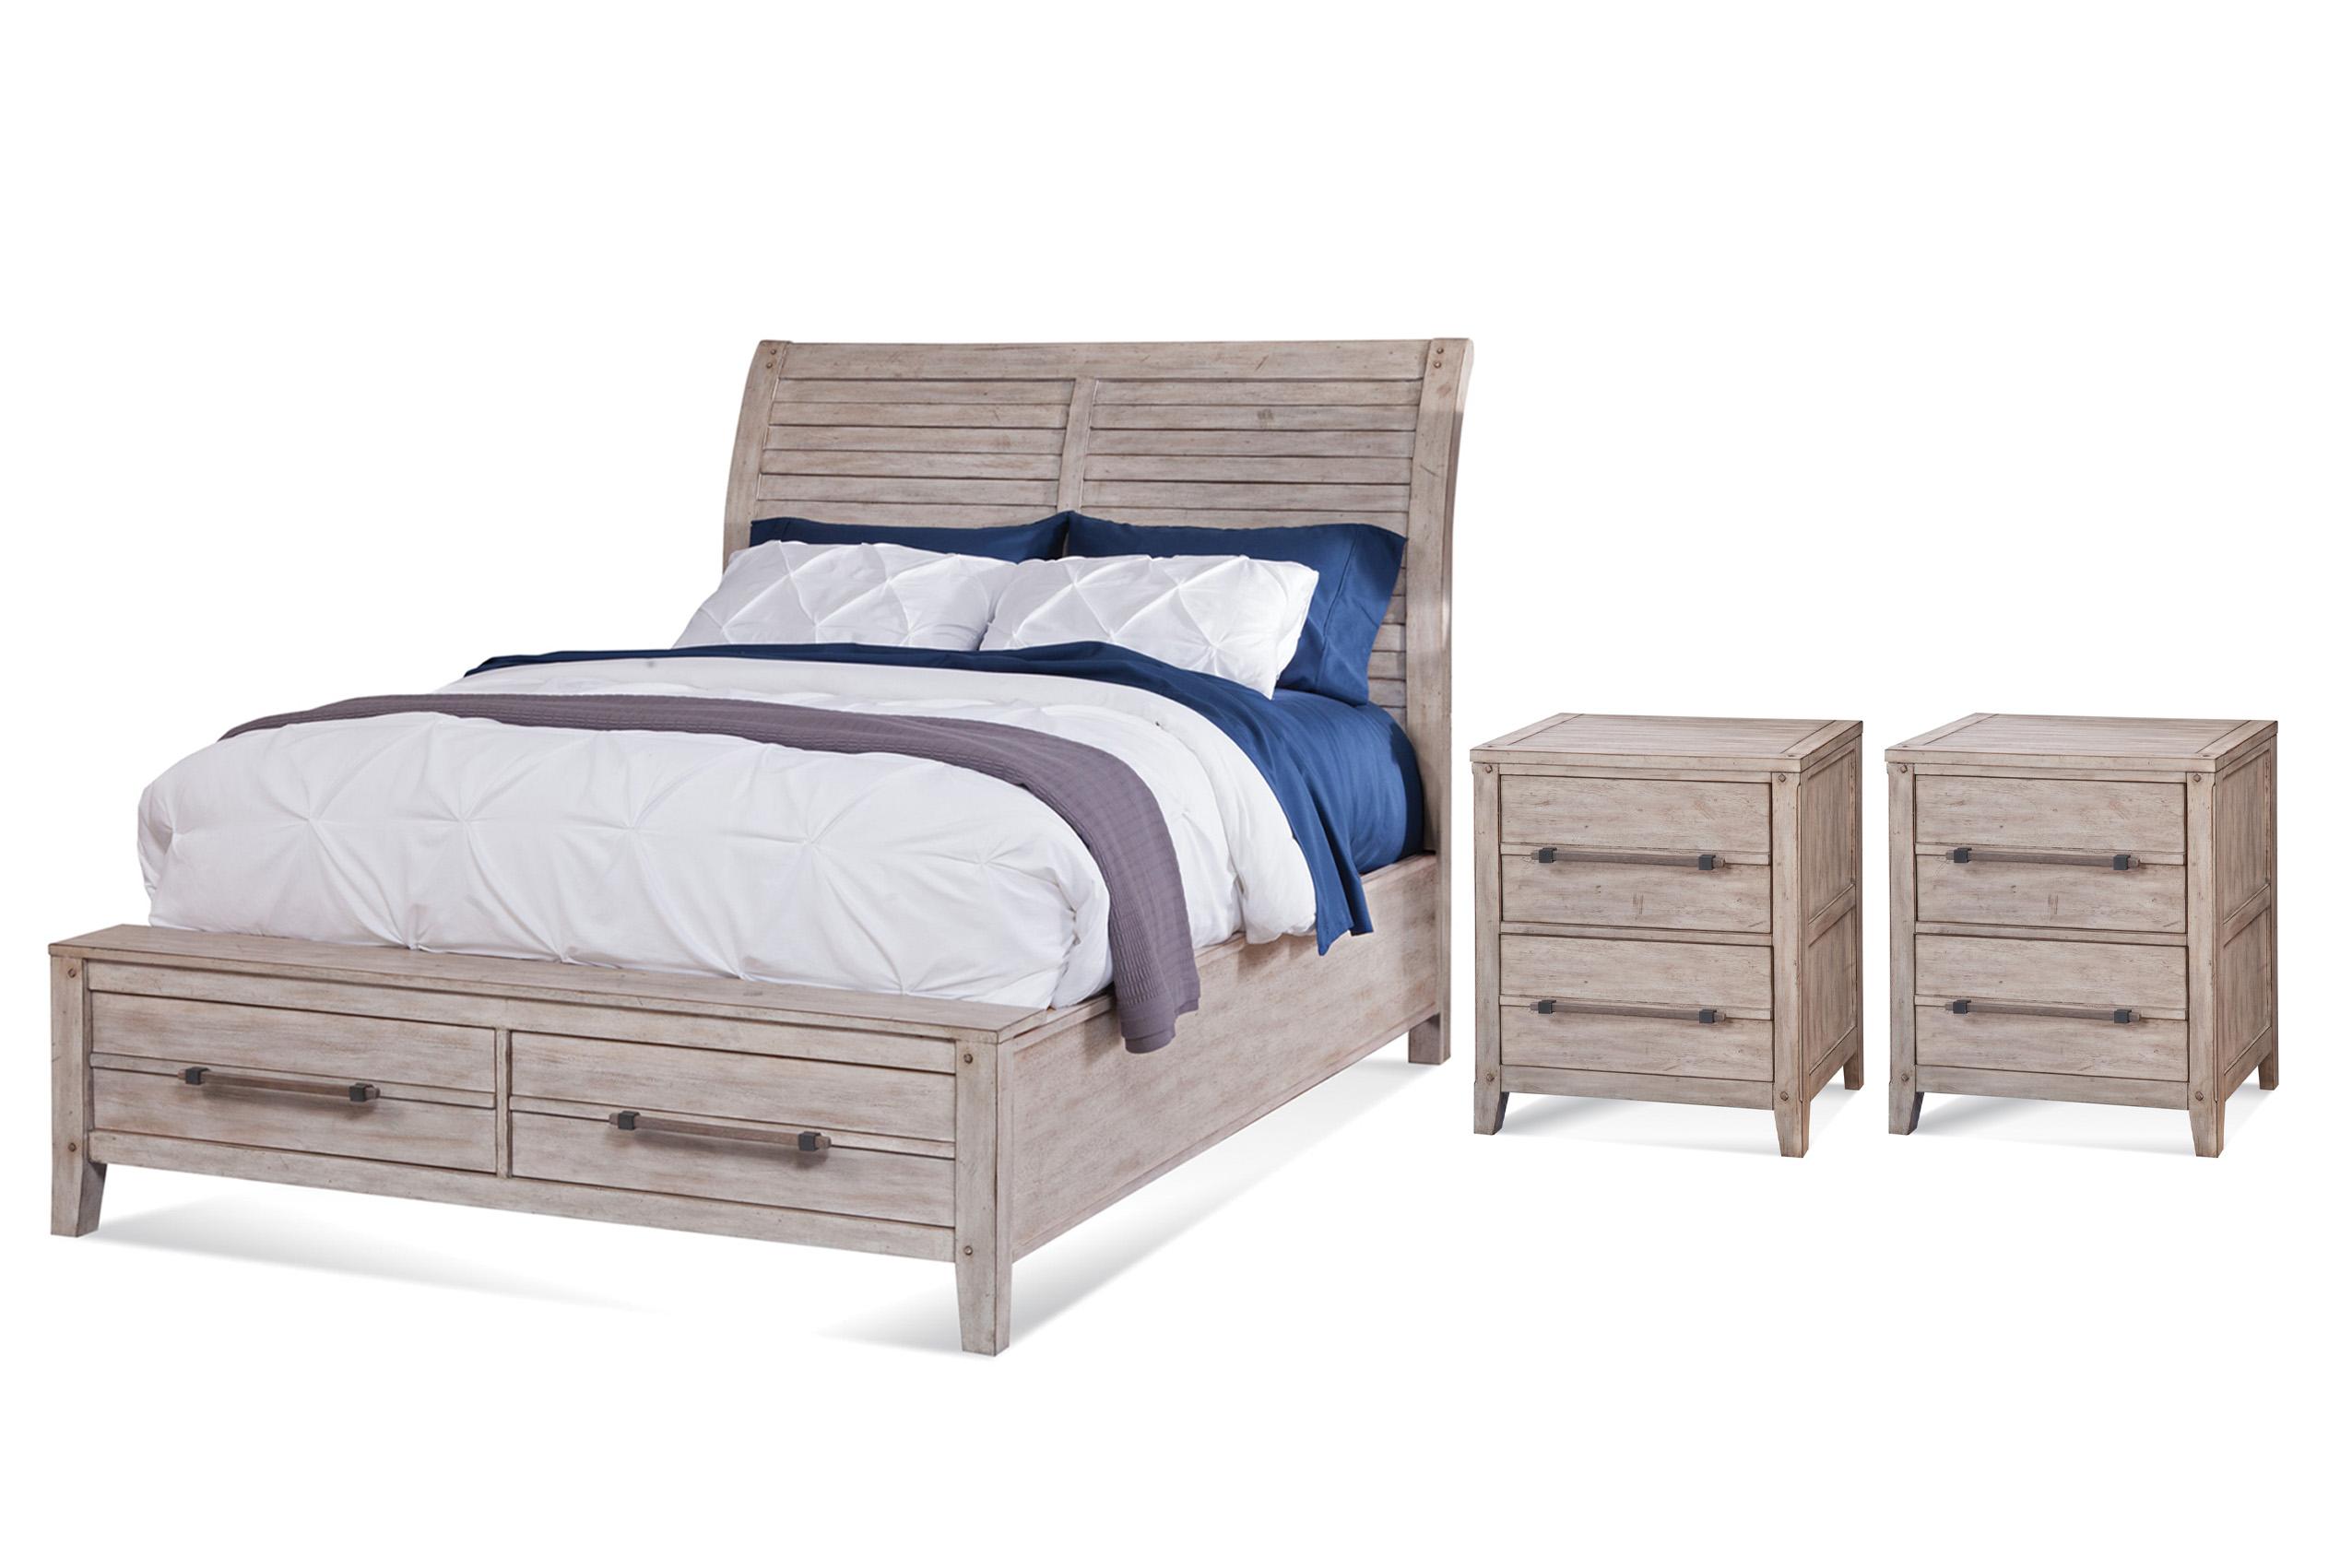 Classic, Traditional Sleigh Bedroom Set AURORA 2810-50PSB 2810-50PSB-2810-420-2N-3PC in whitewash 